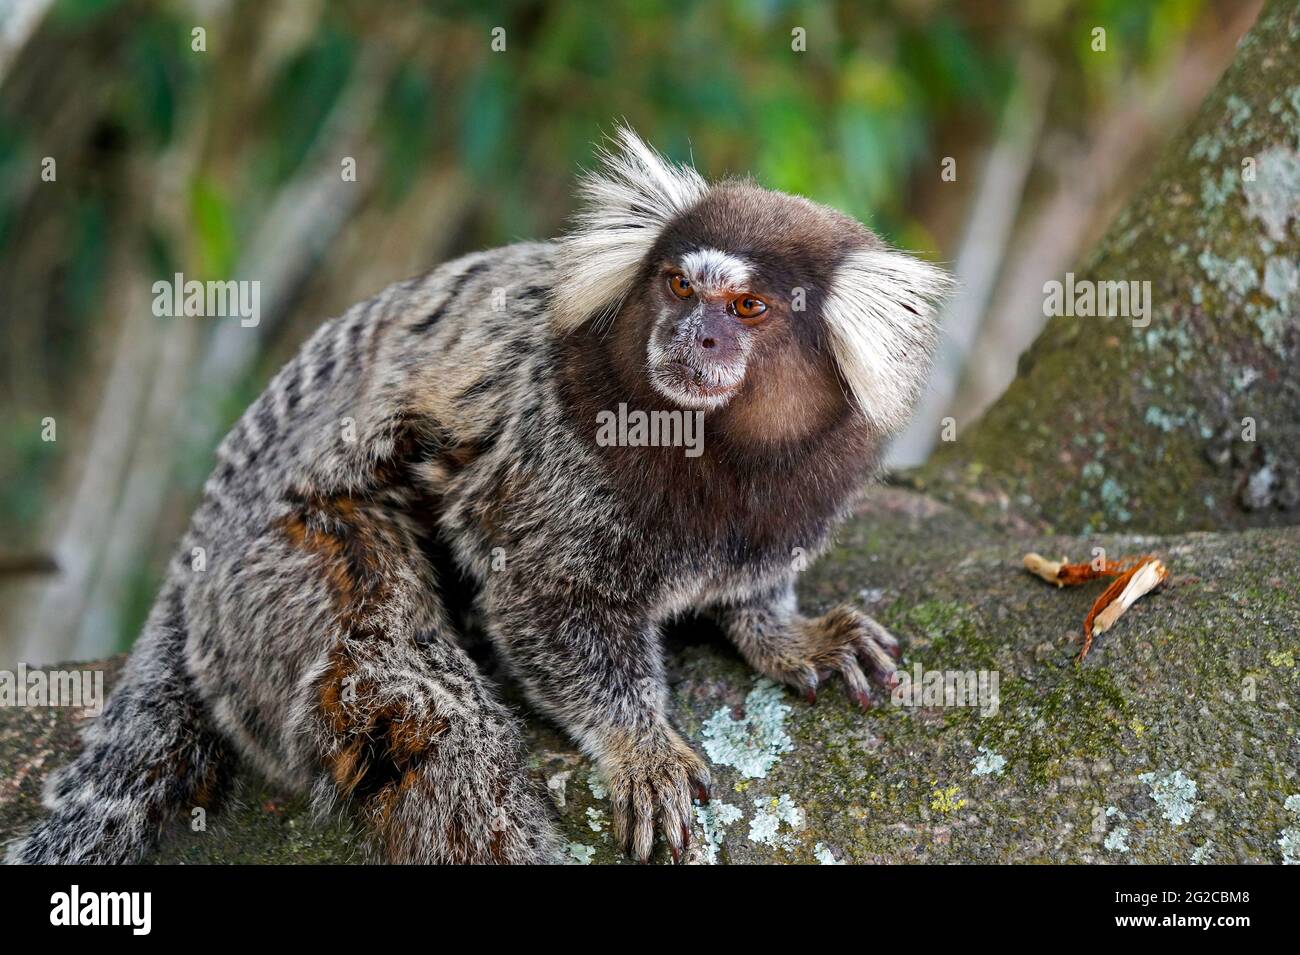 Common marmoset (Callithrix jacchus) on tree Stock Photo